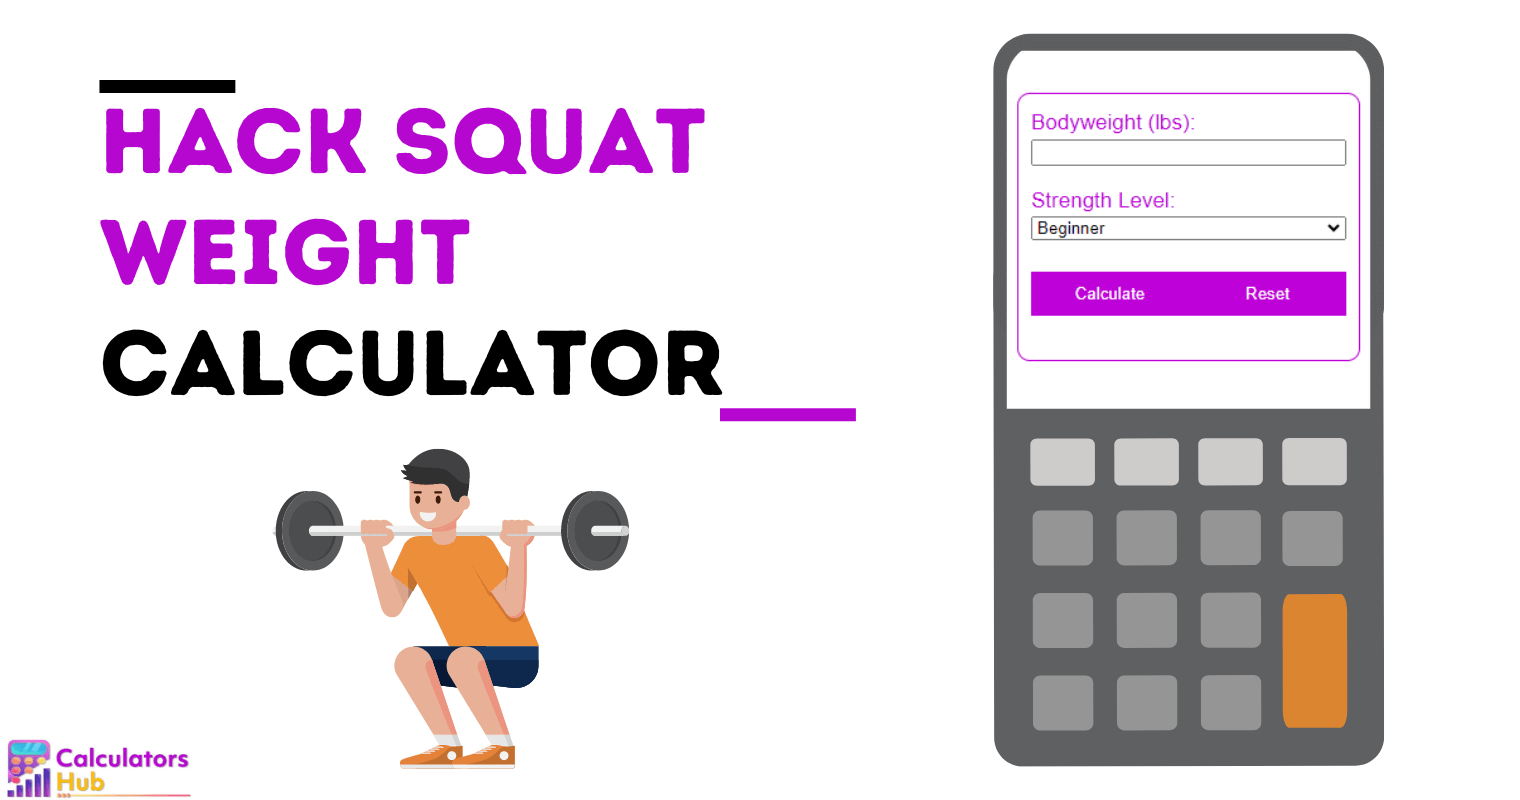 Hack Squat Weight Calculator